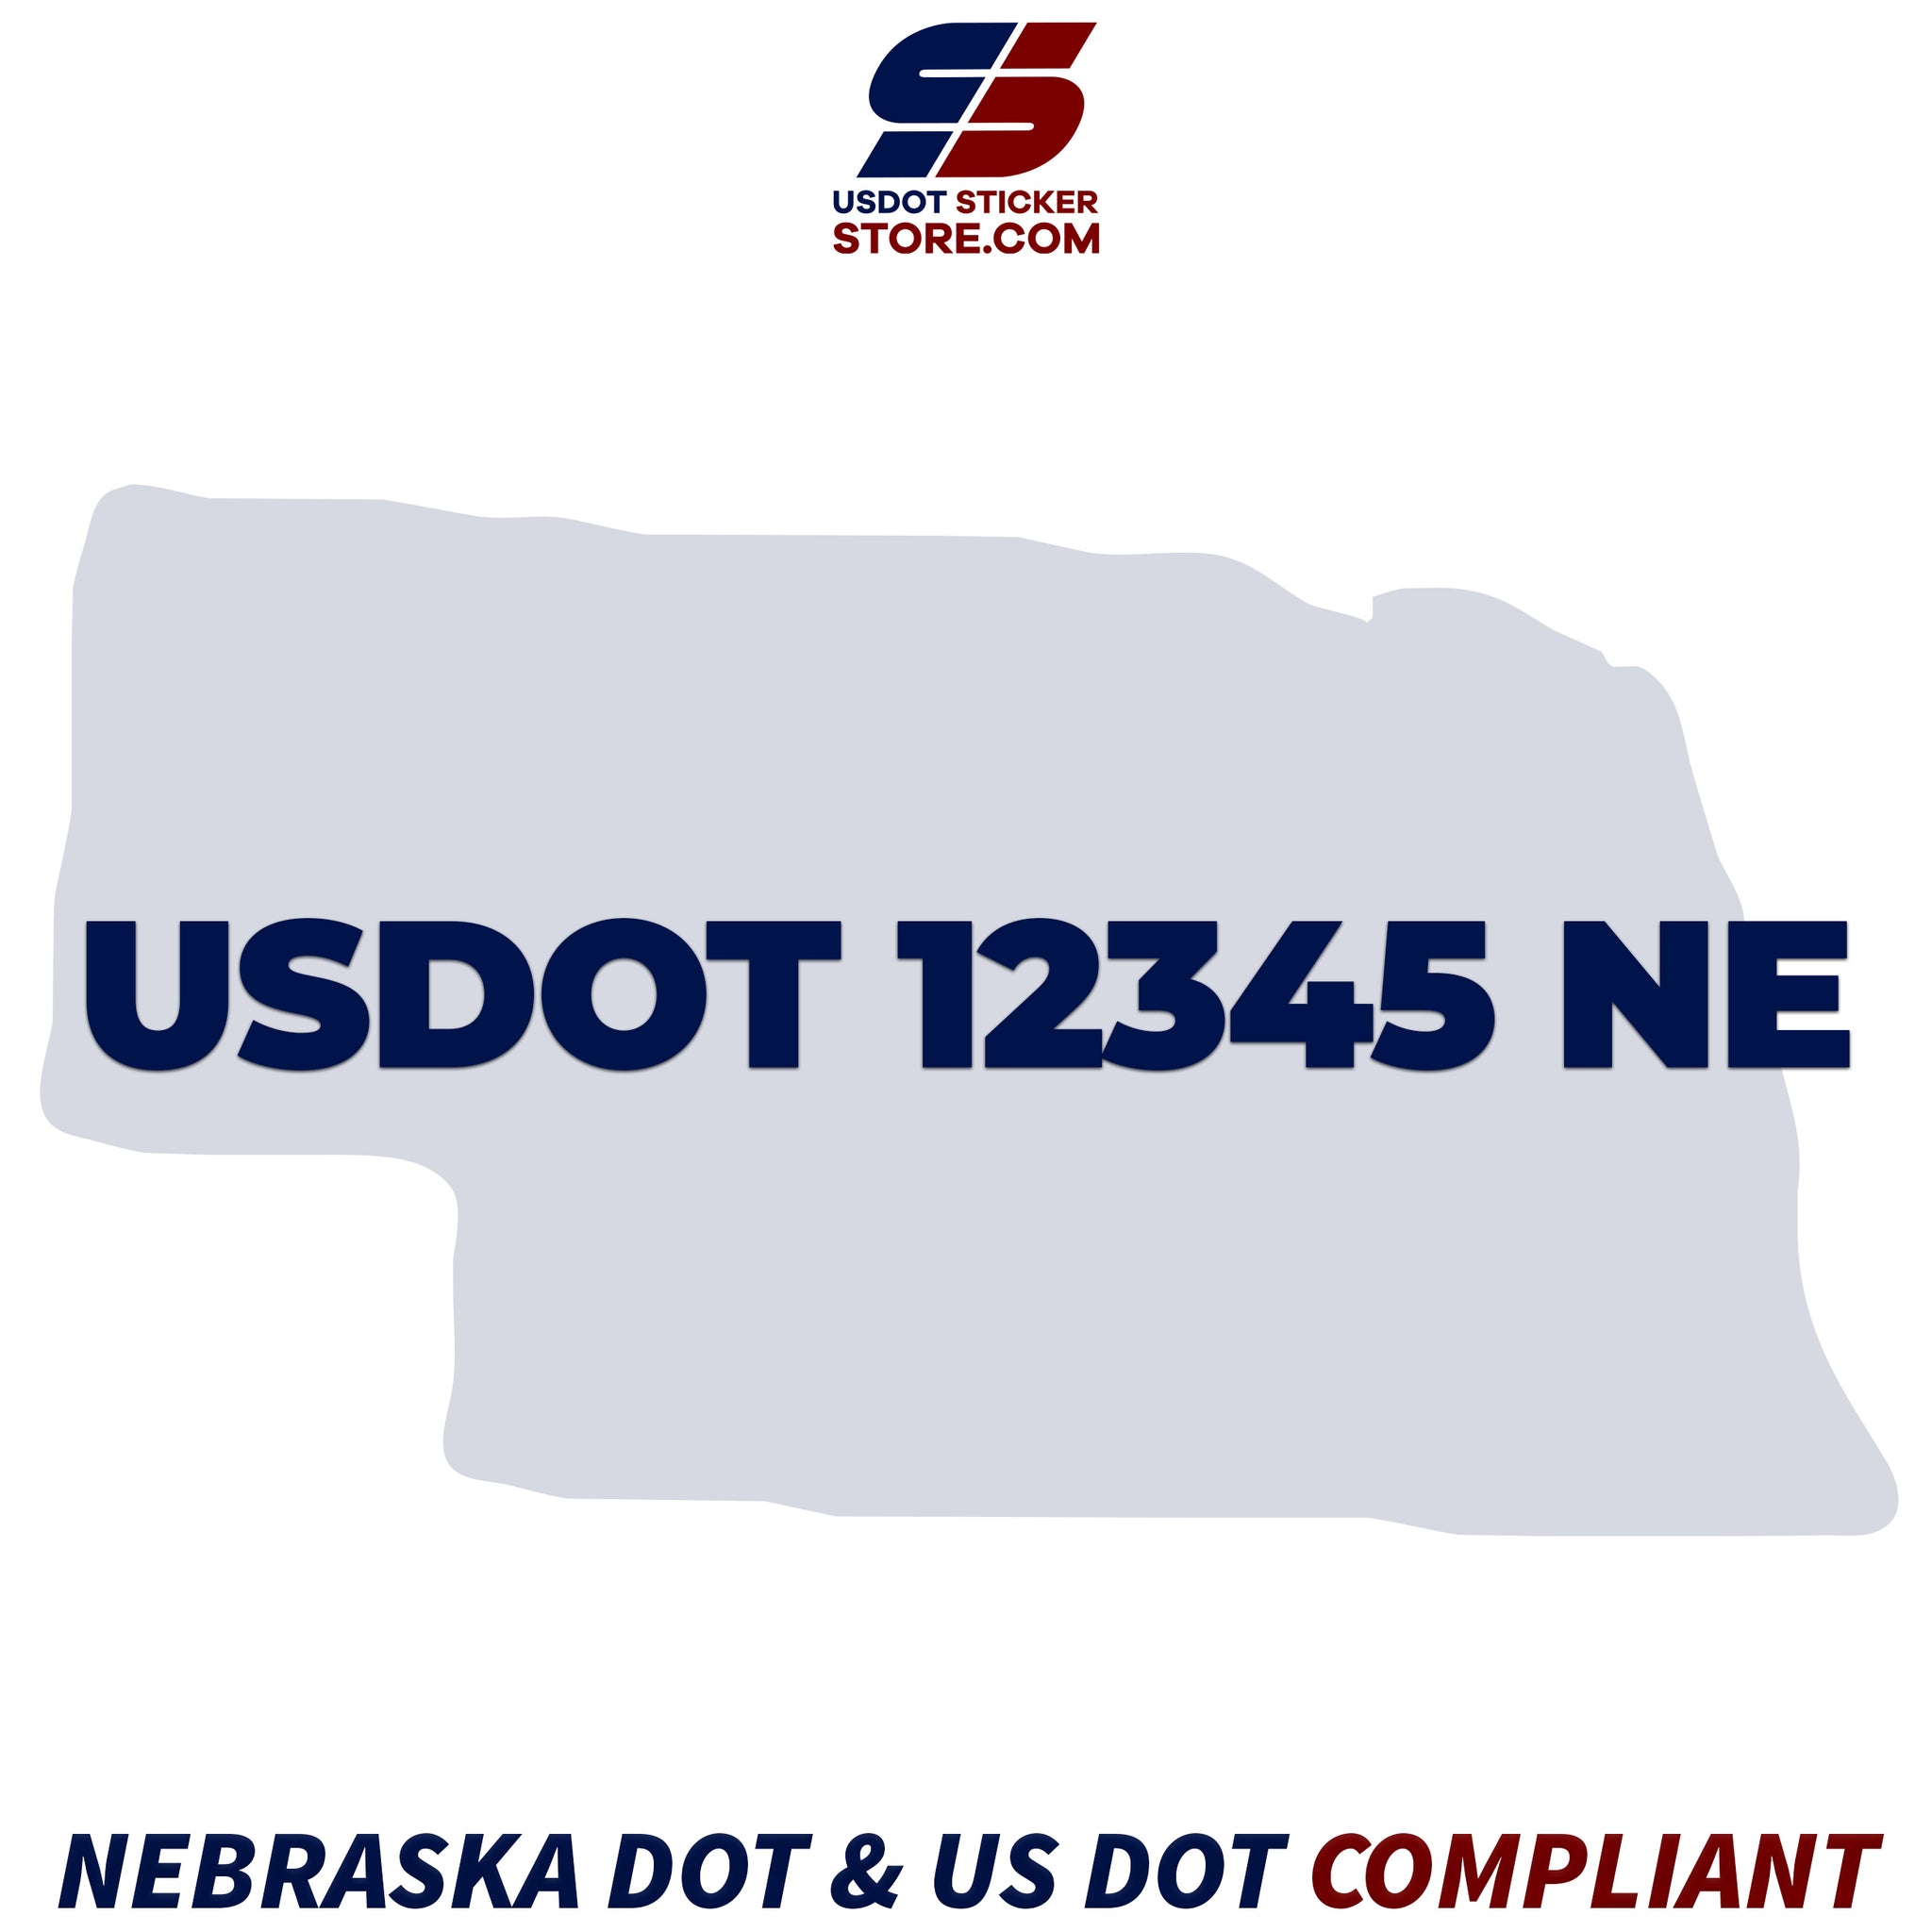 usdot sticker Nebraska